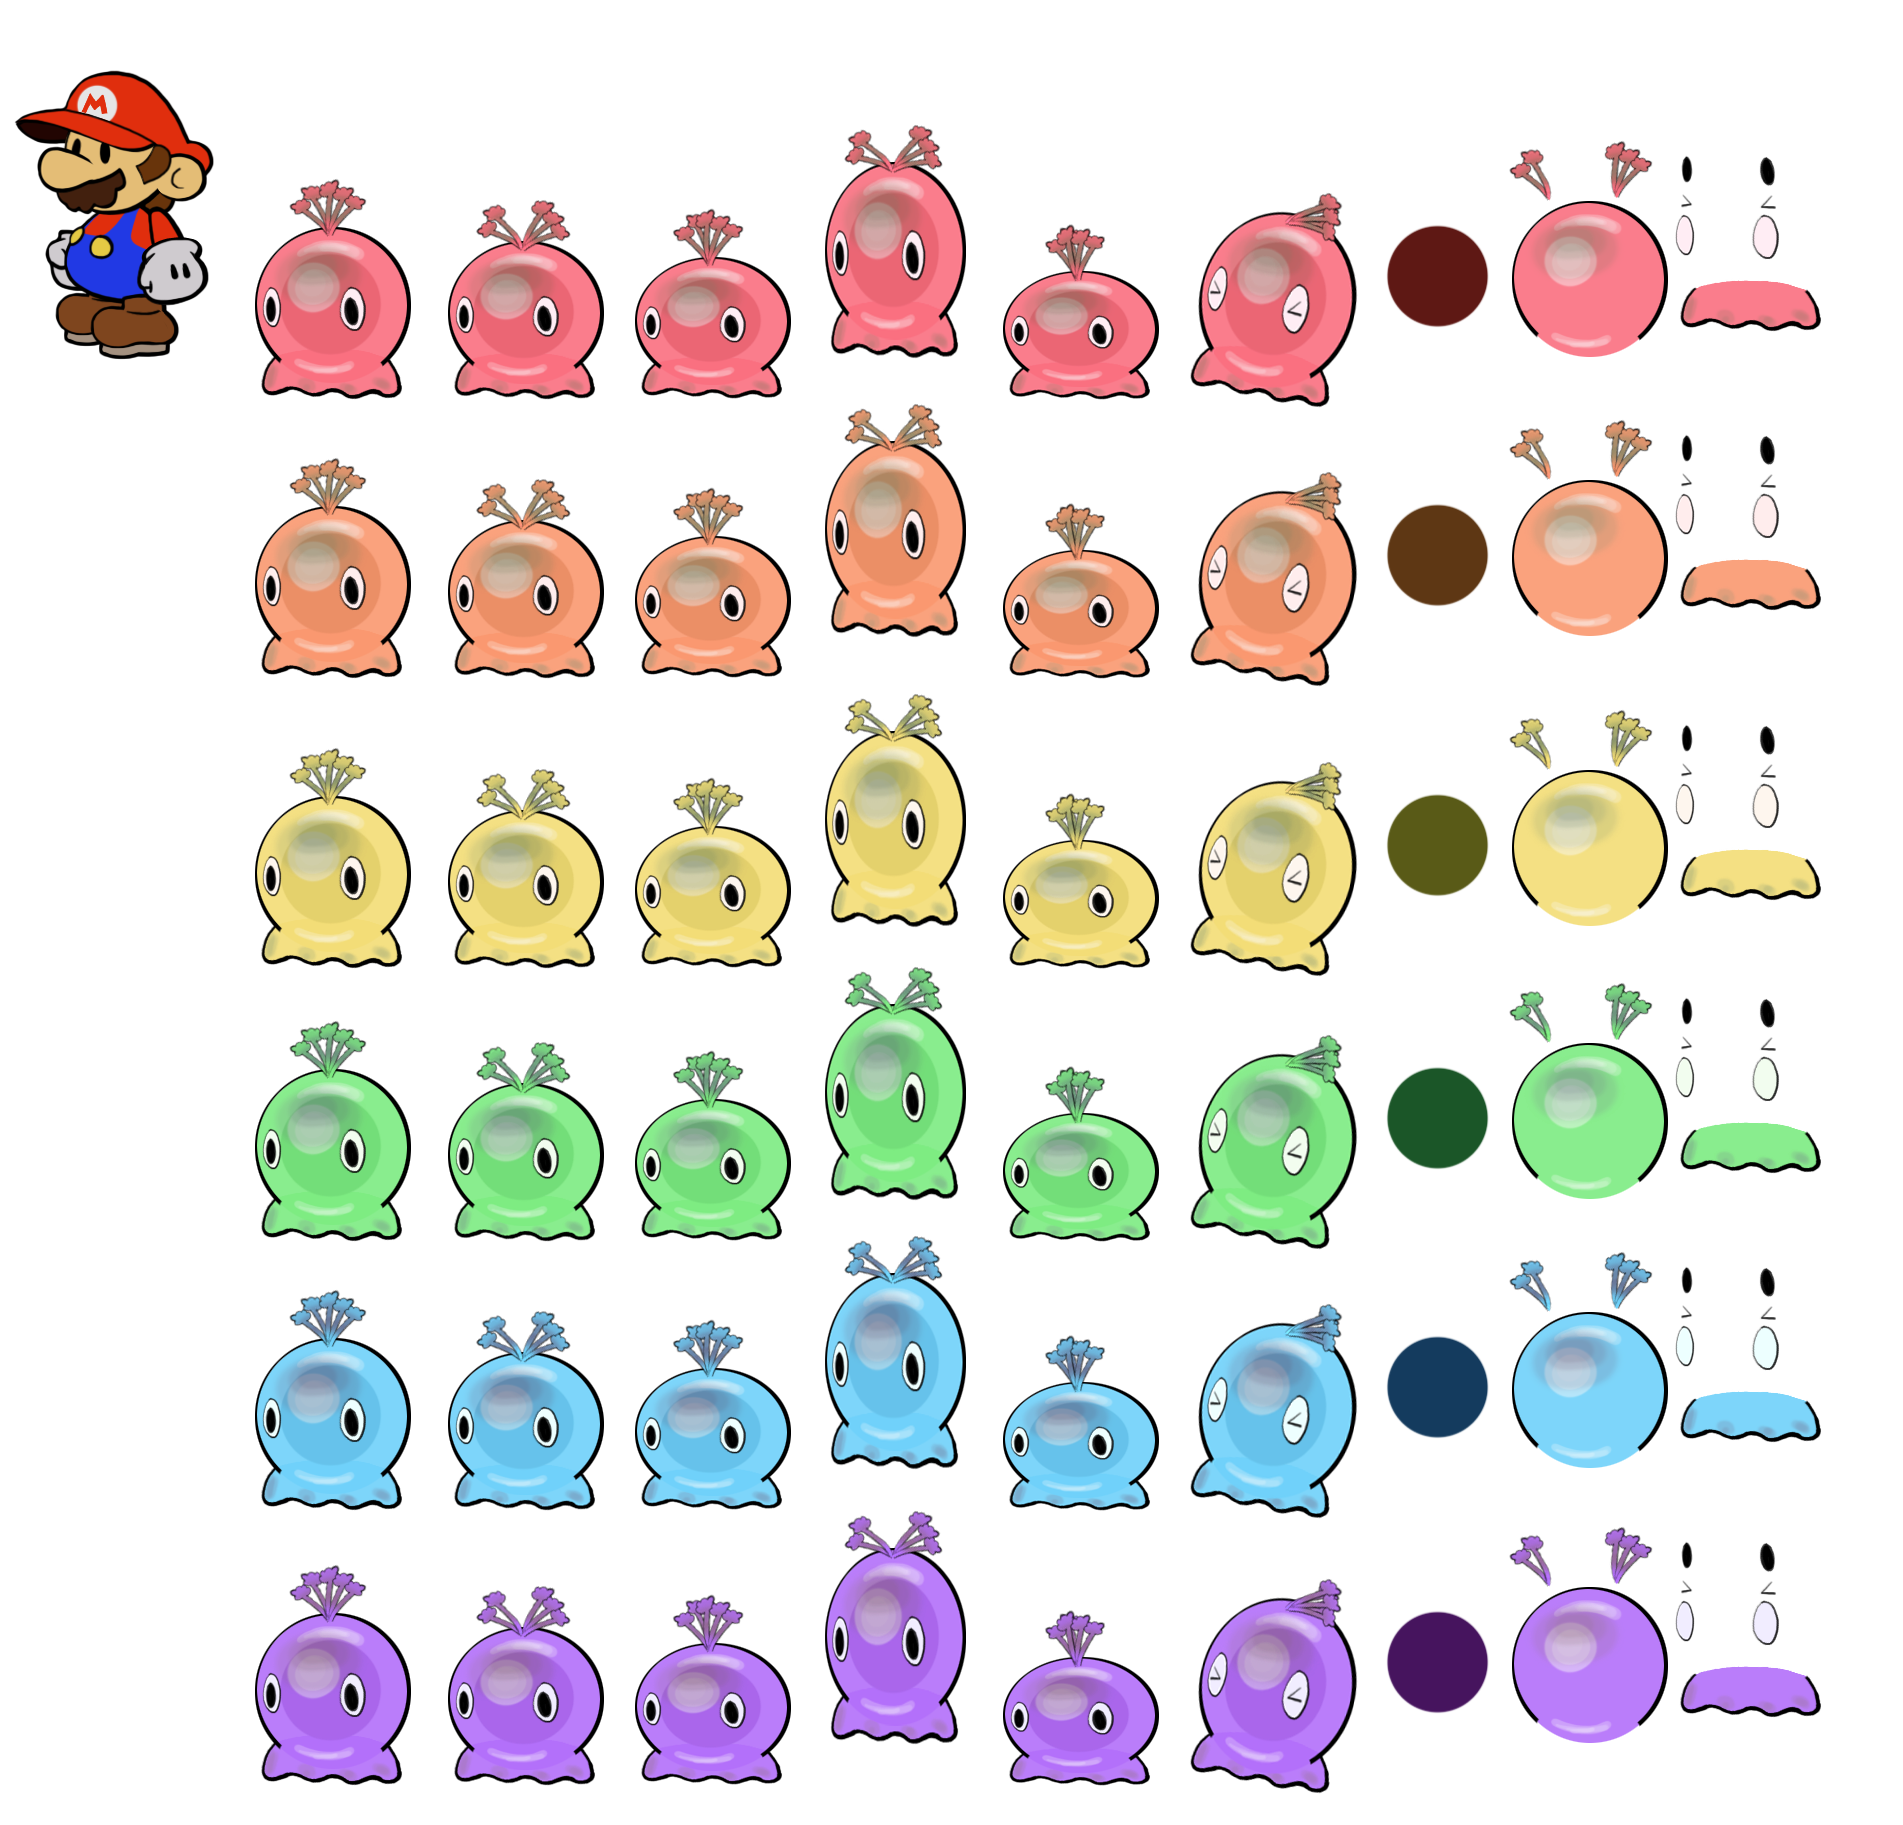 Mario Customs - Goobles (Paper Mario-Style)